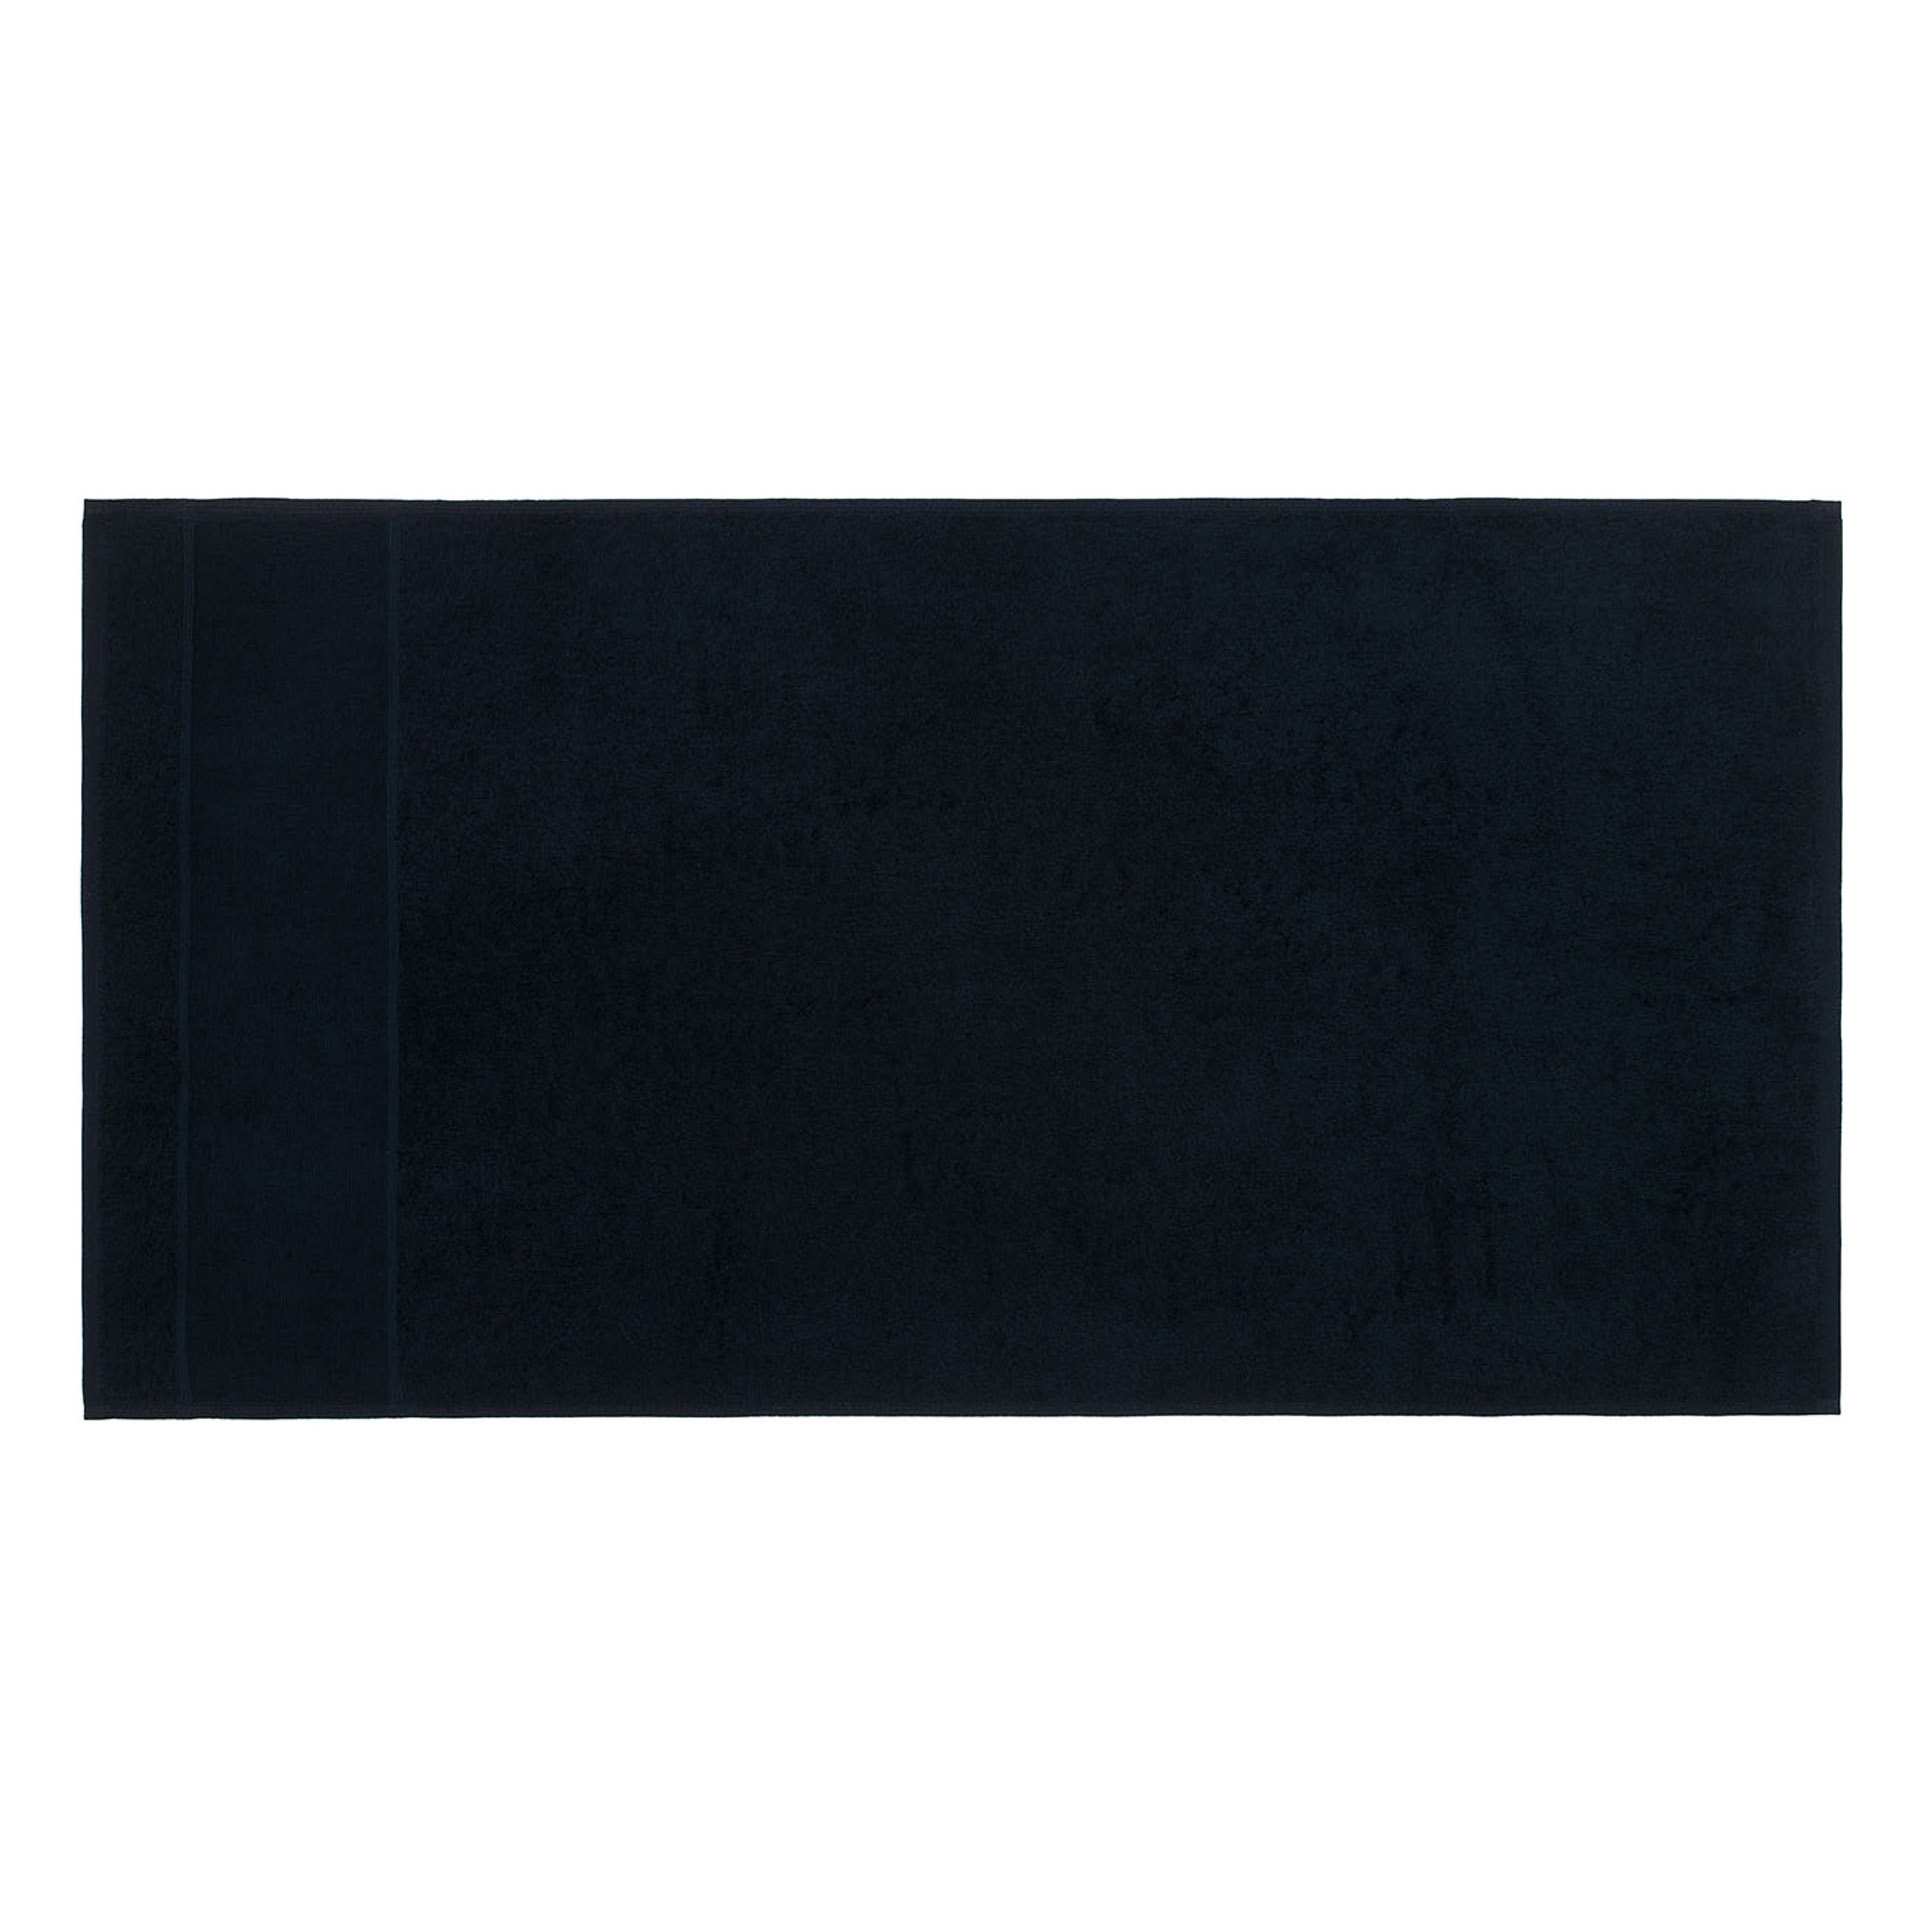 Bade-/ Saunatuch - Serie LISSABON - schwarz - Abm. 100 x 180 cm - Baumwolle - 200000-9-99-D